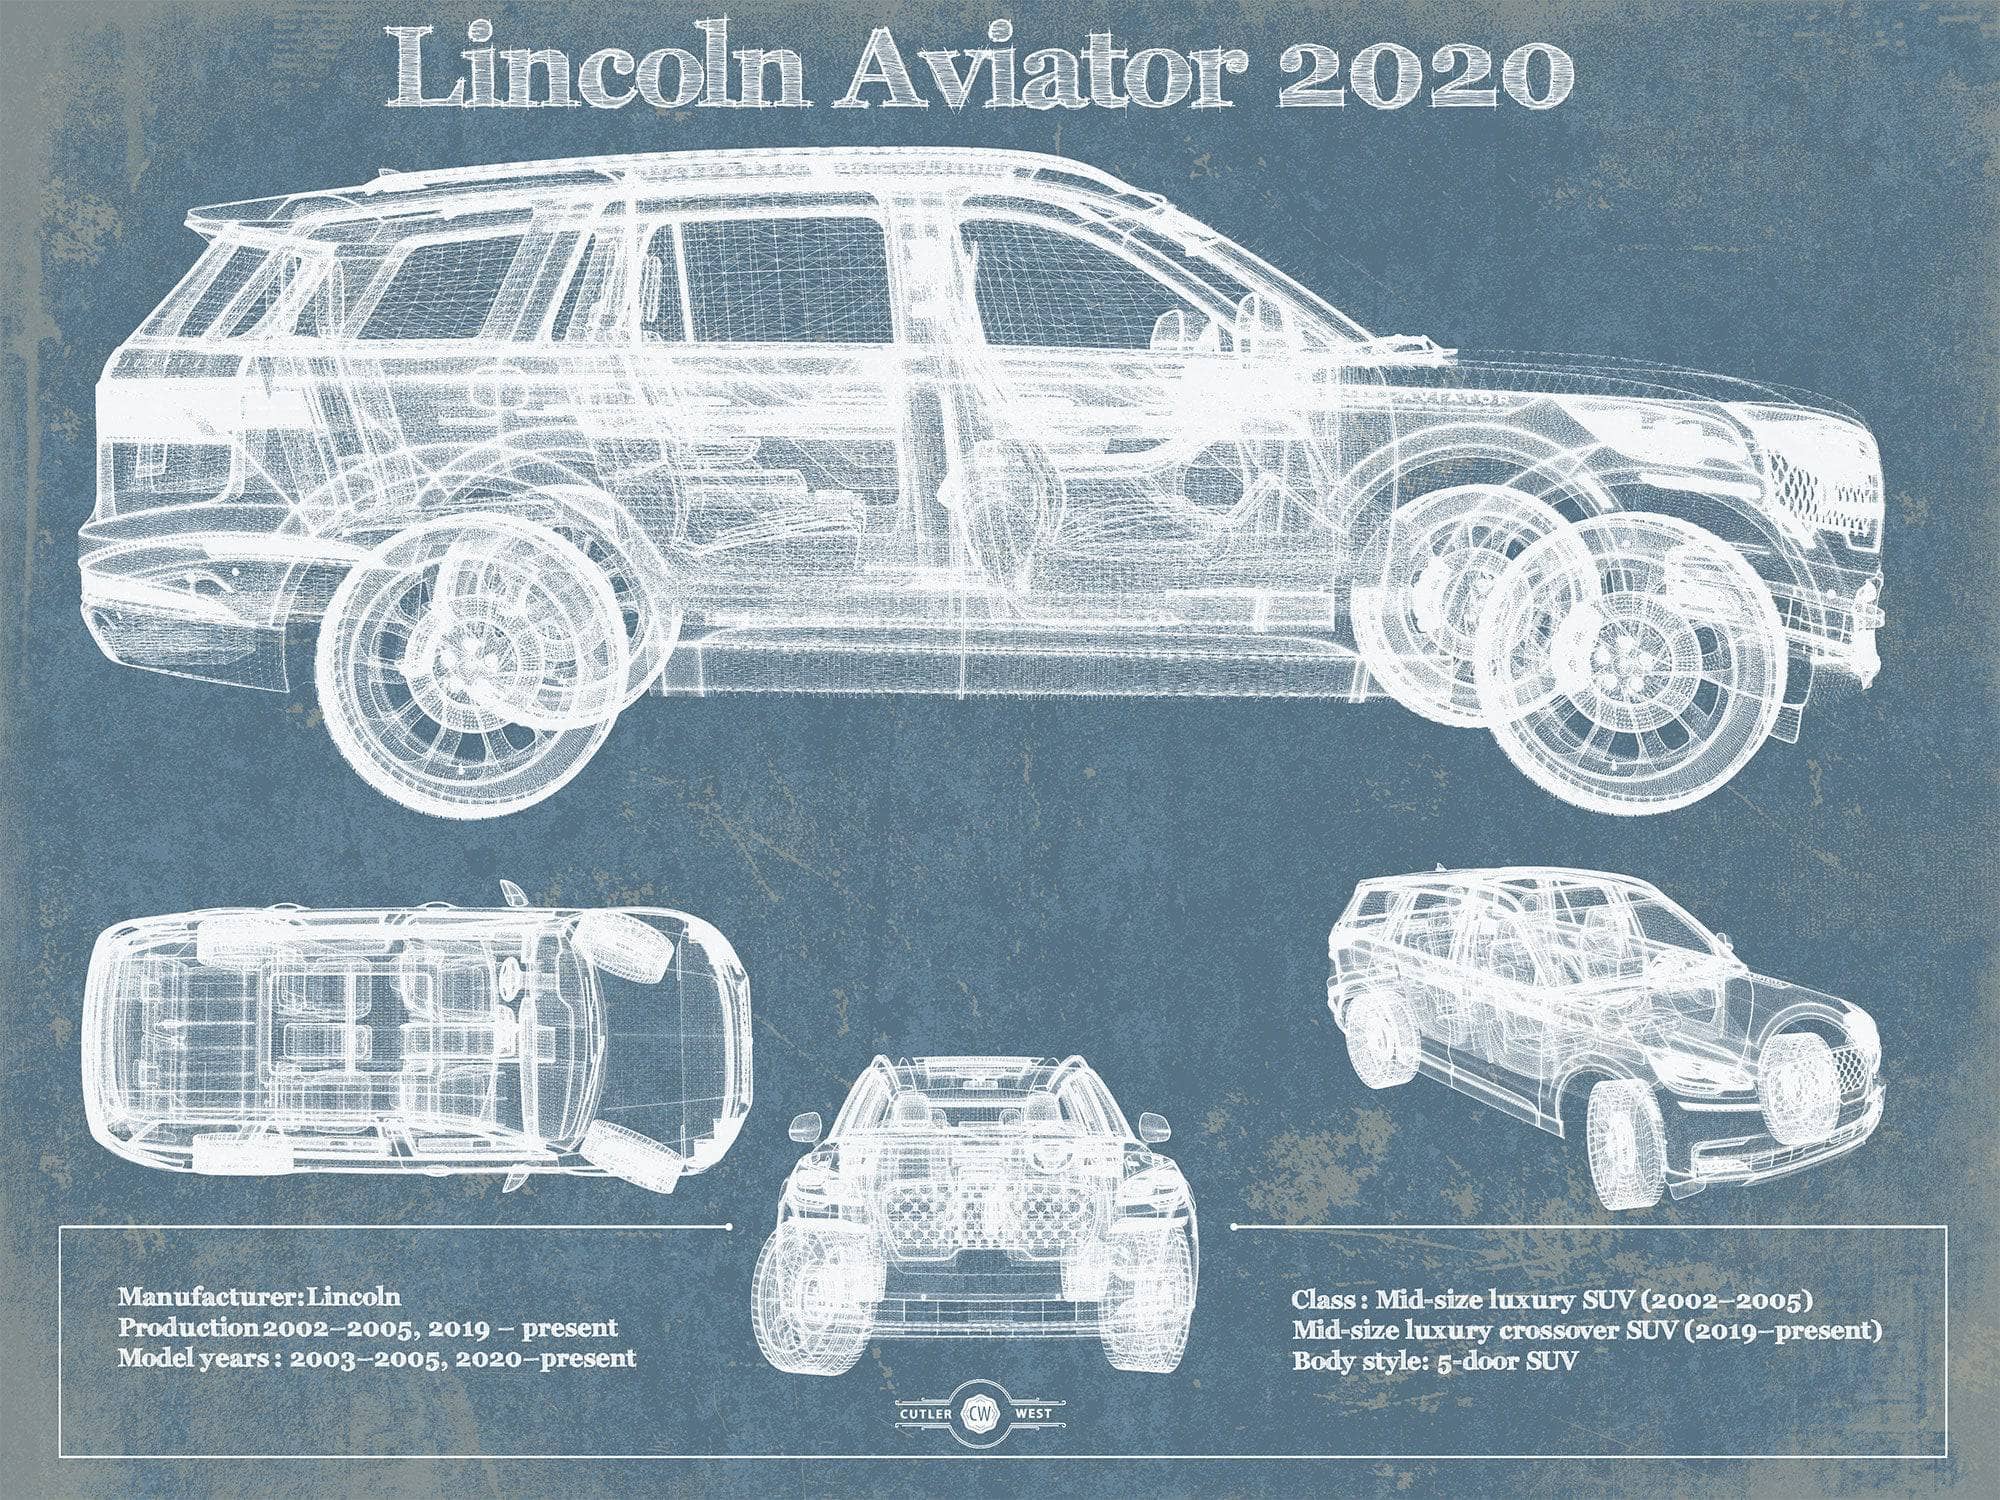 Cutler West Lincoln Aviator 2020 Vintage Blueprint Print